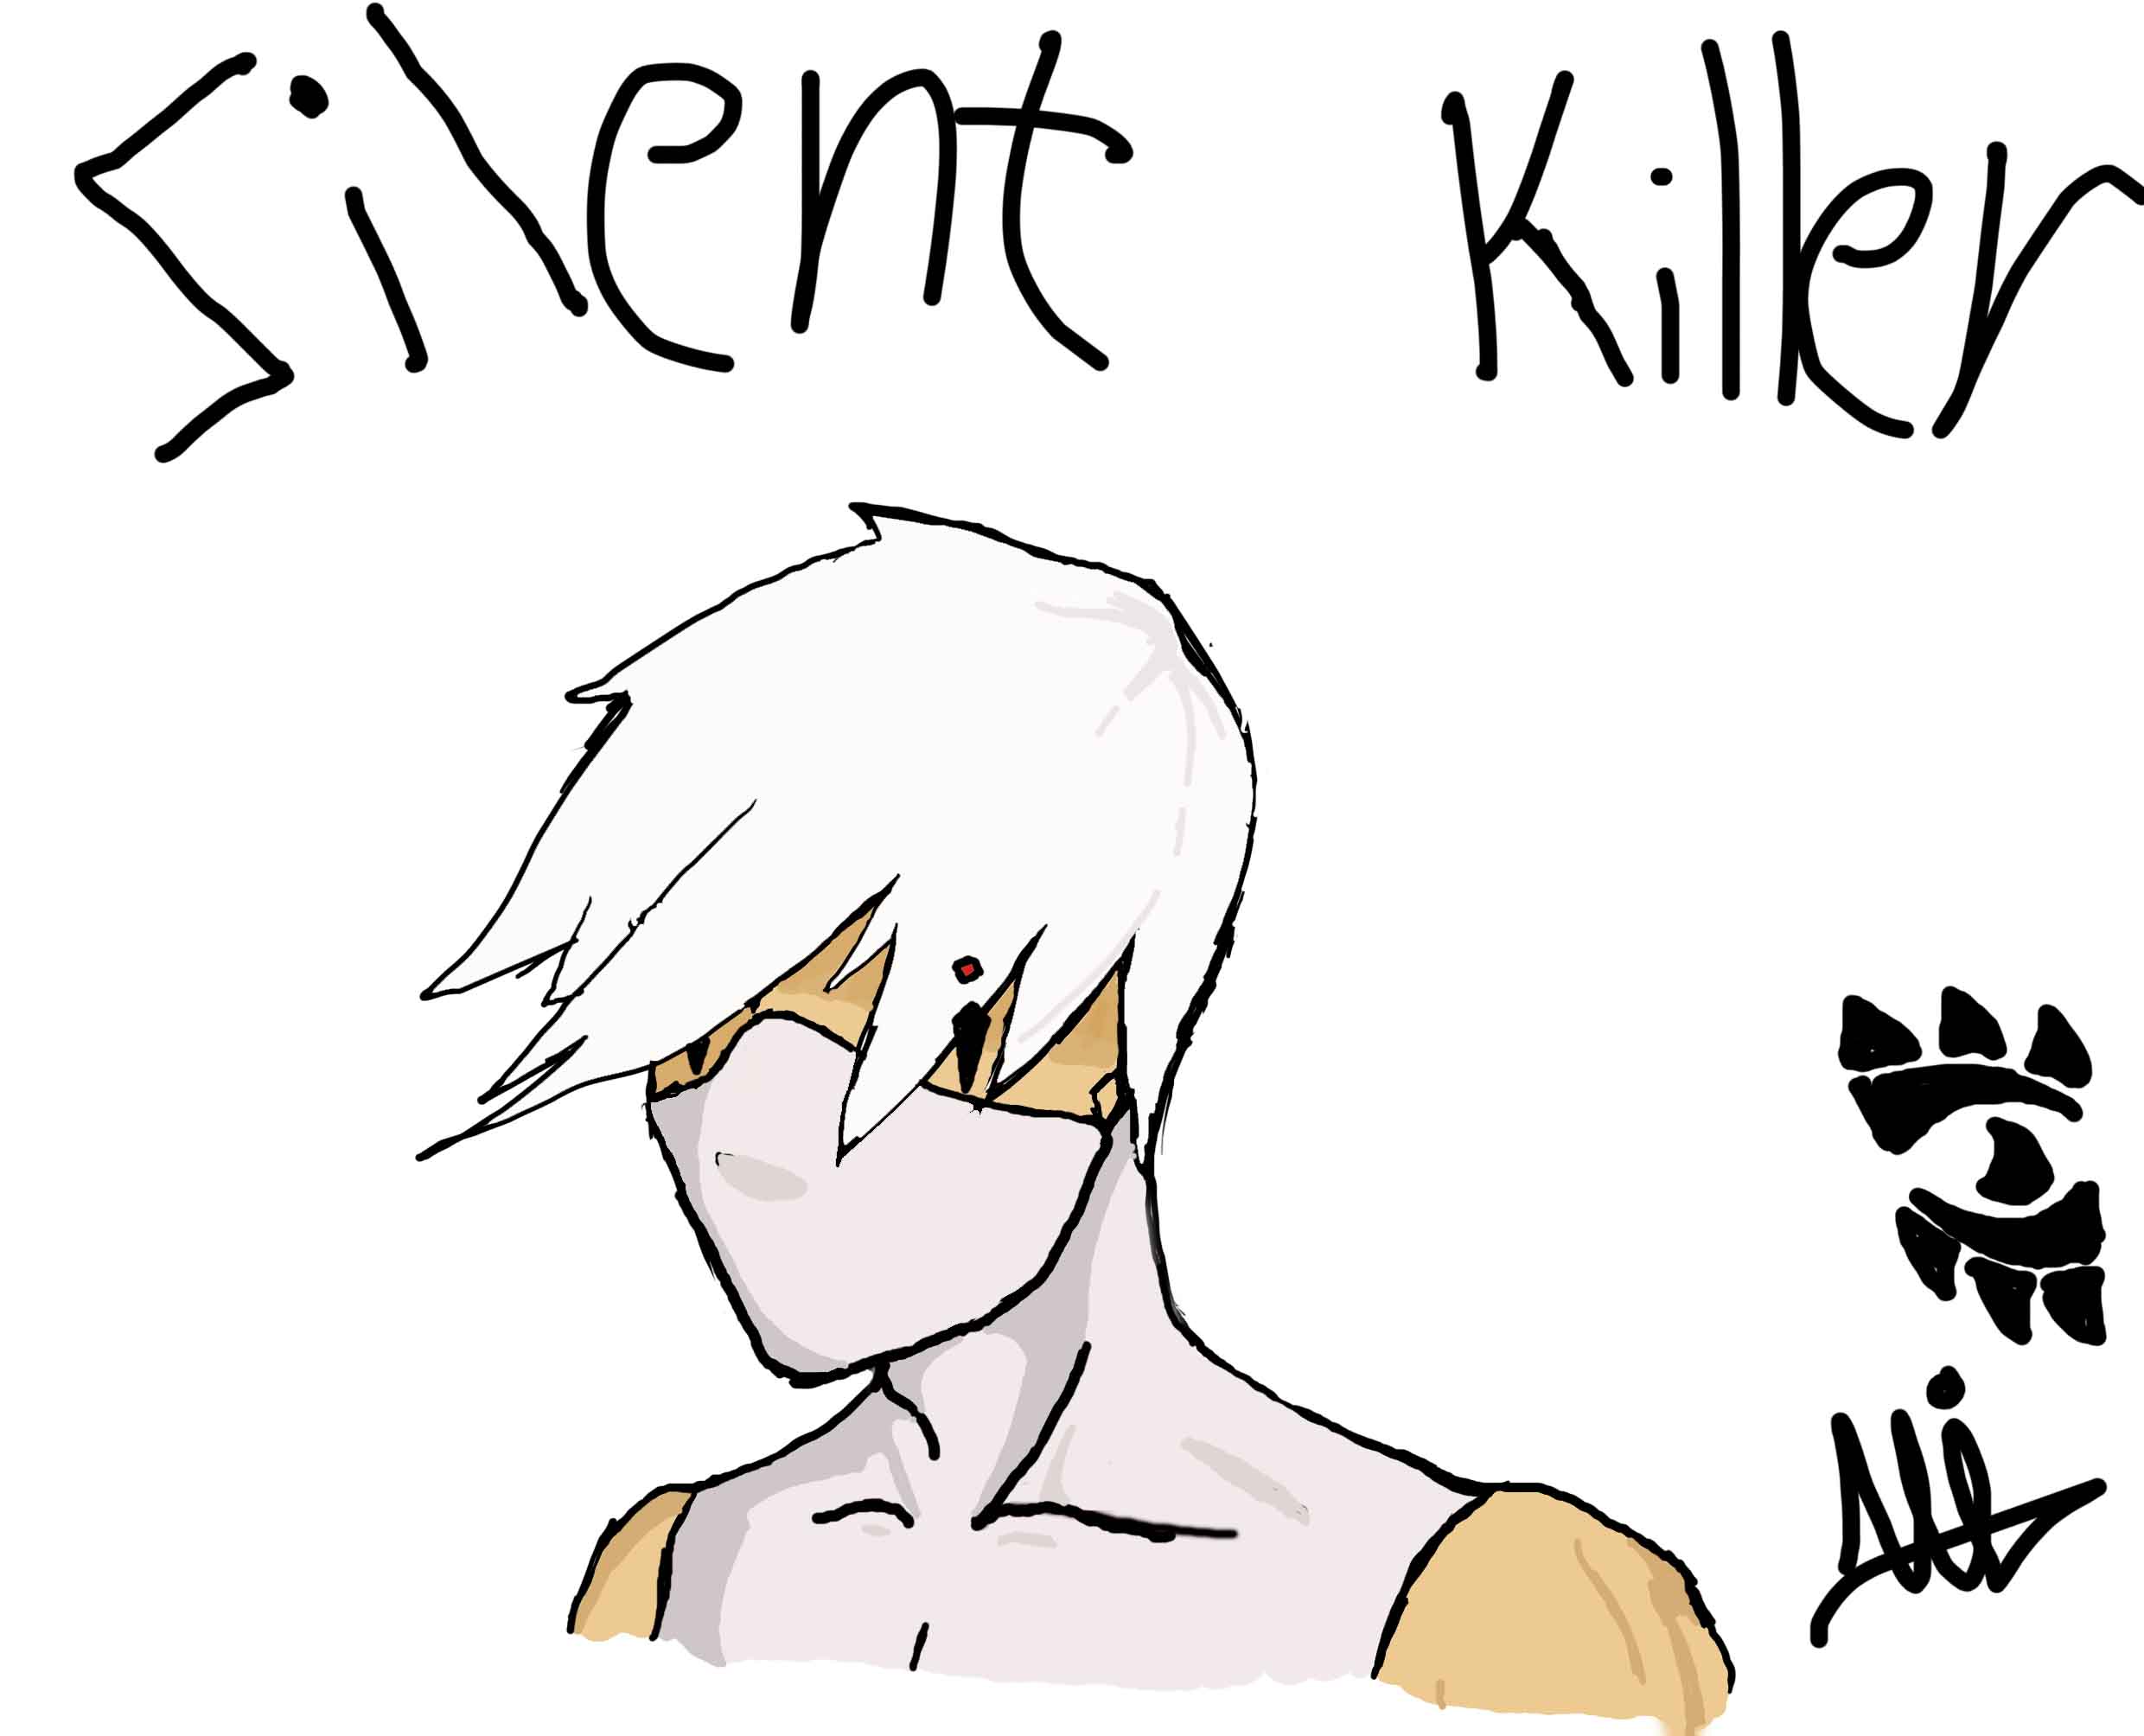 a silent killer by niv